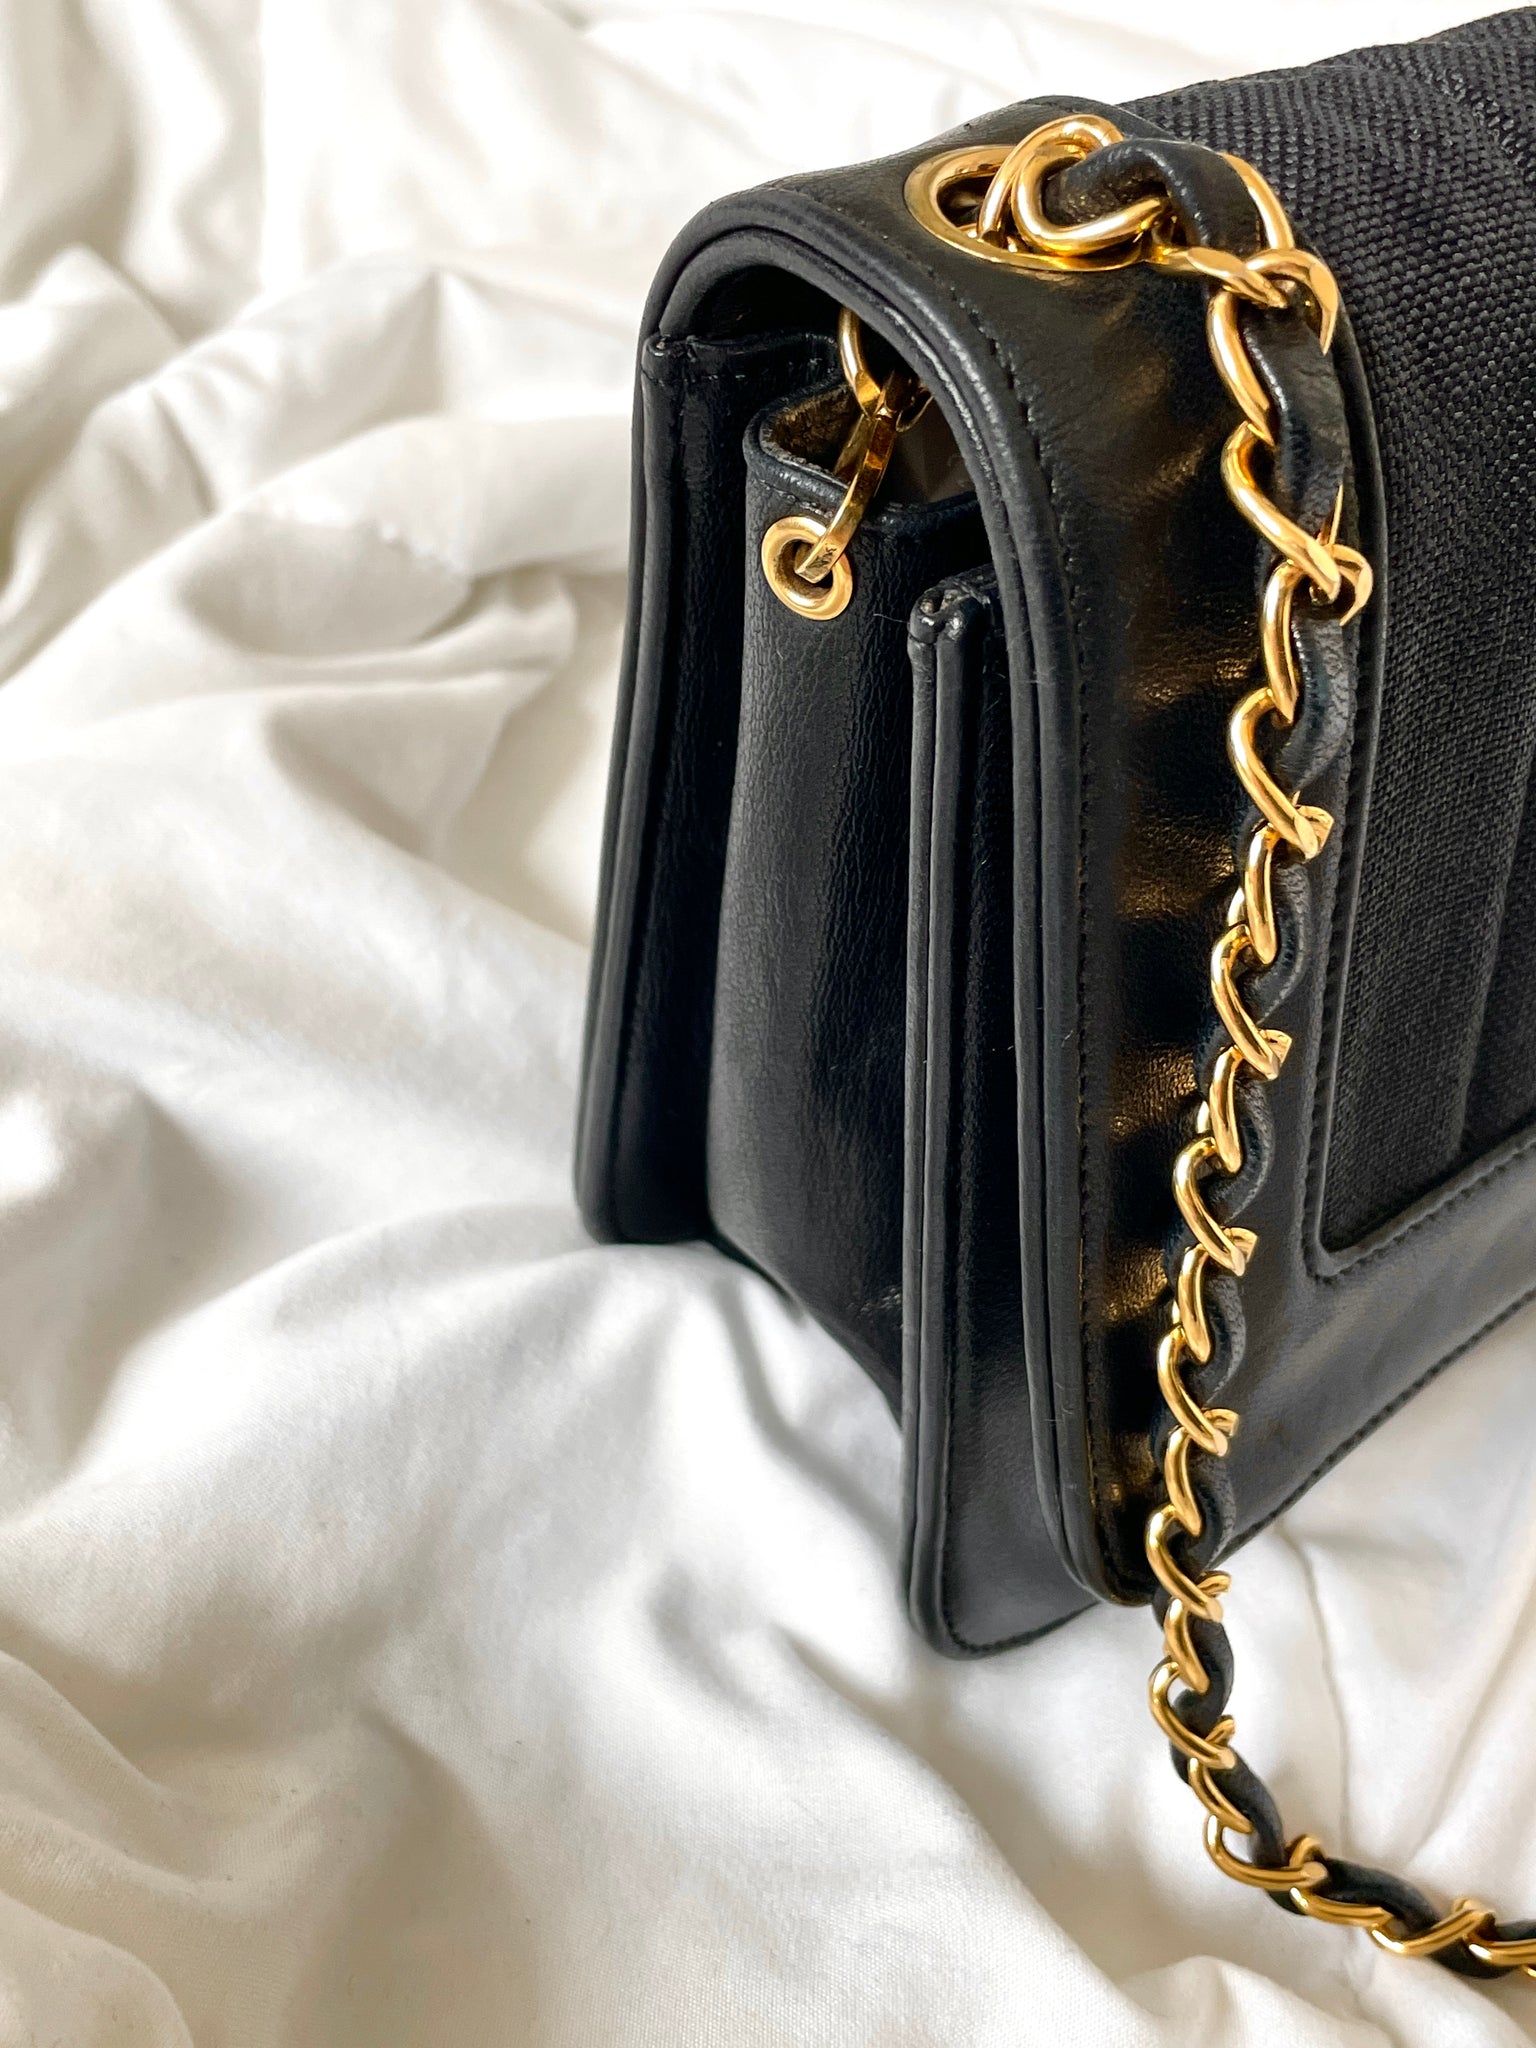 Rare Chanel Black Lambskin and Linen Bag